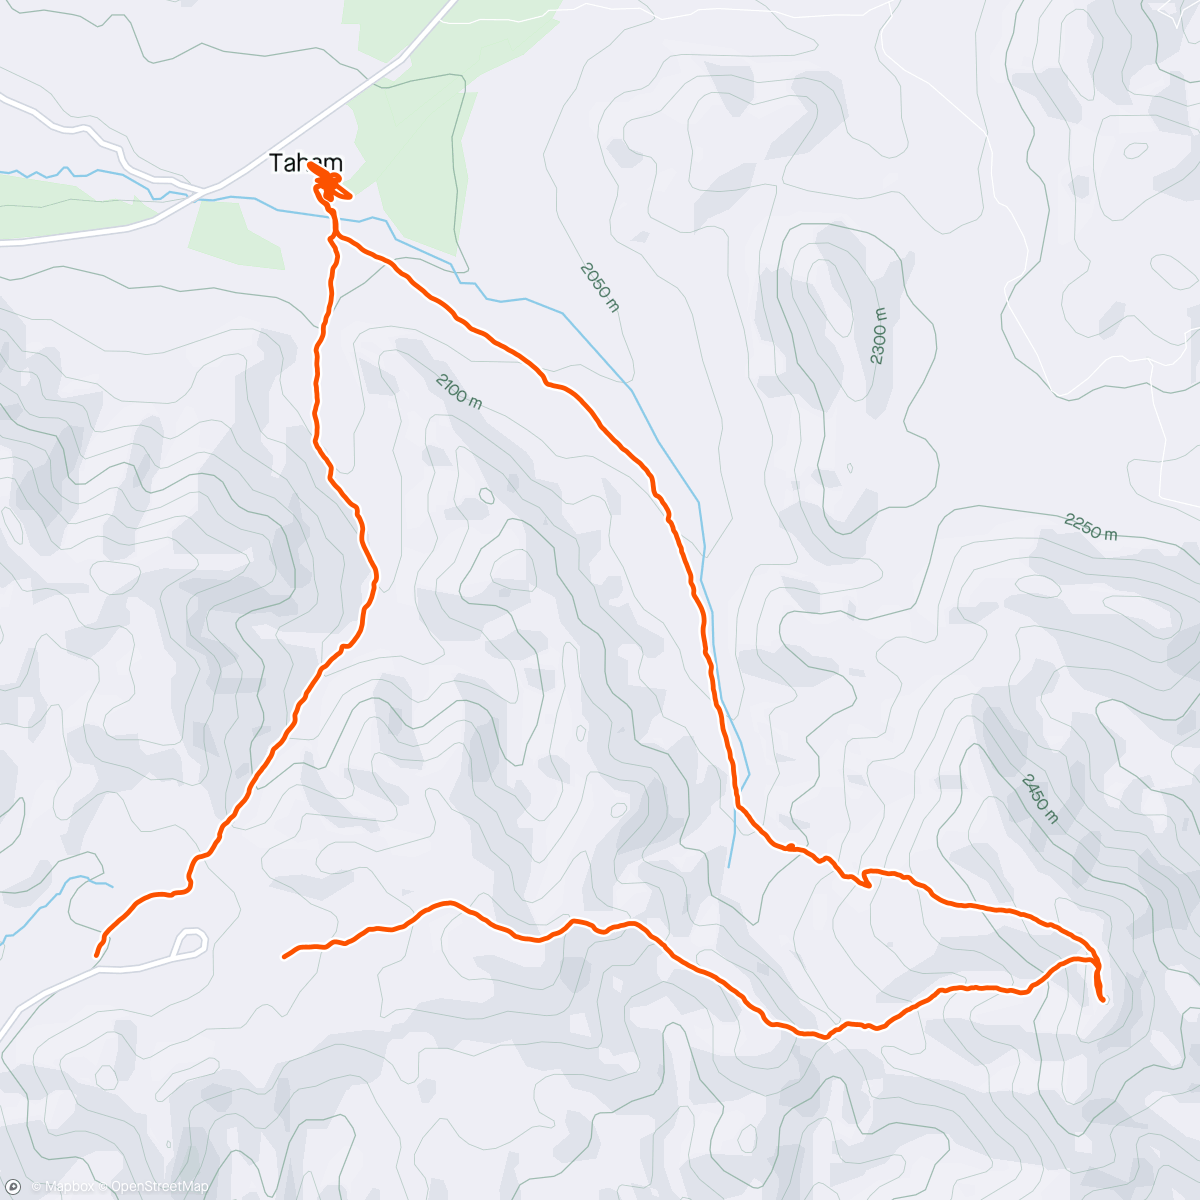 「Morning Hike」活動的地圖